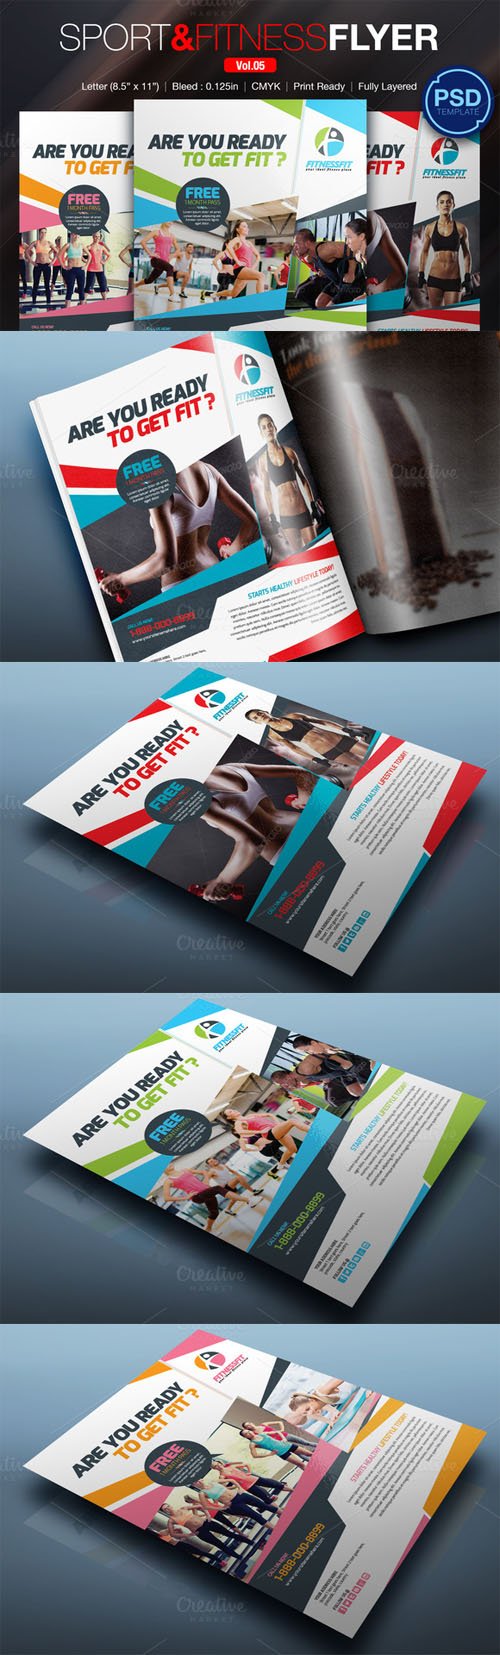 Sport & Fitness Flyer Vol.05 - Creativemarket 165117